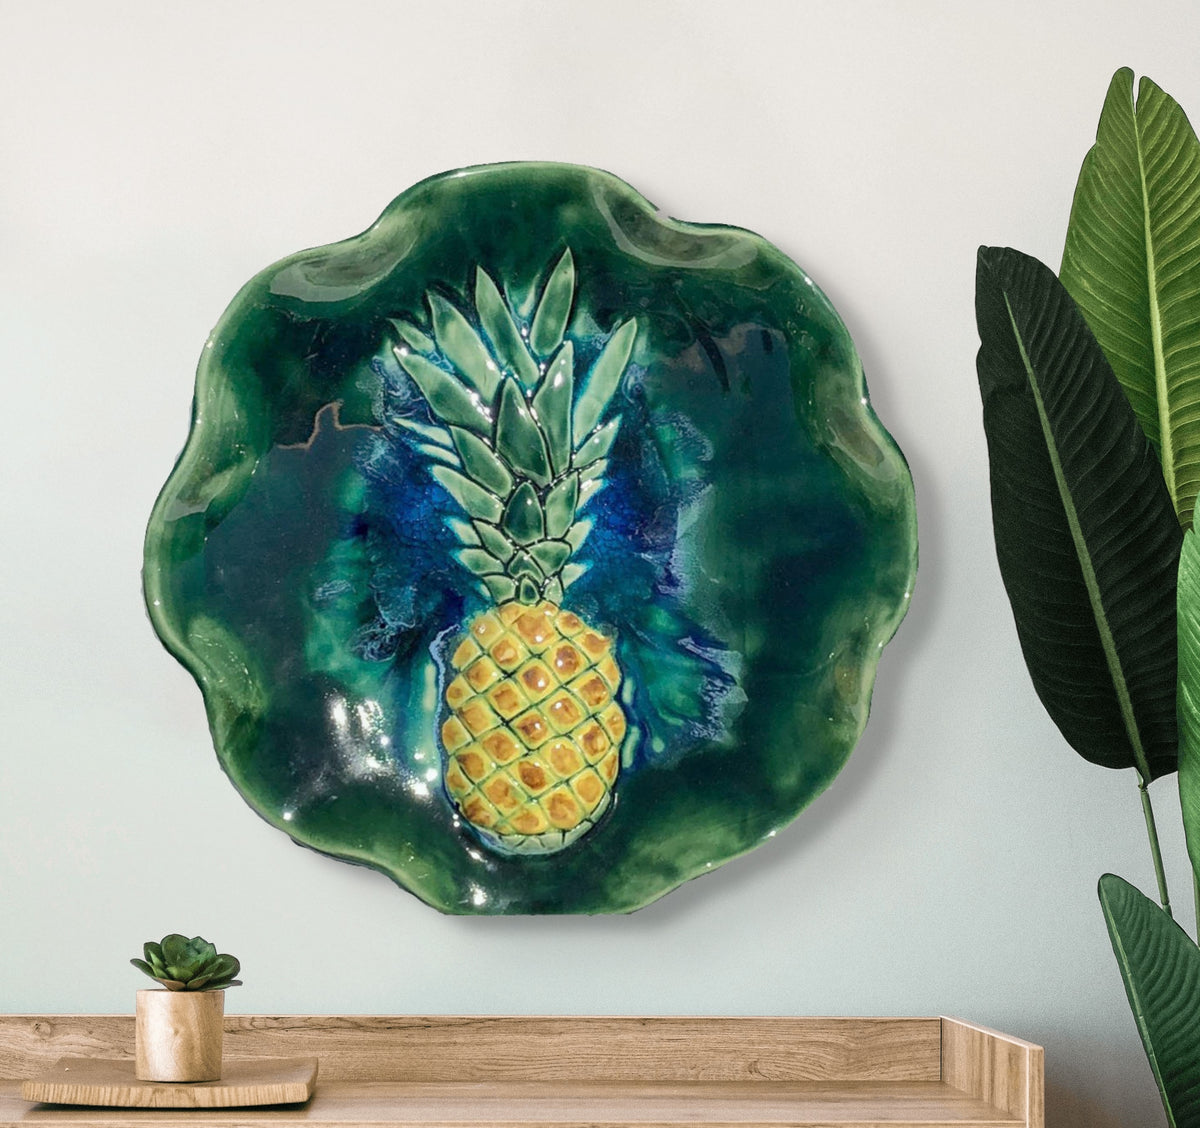 Ceramic Pineapple Wall art, kitchen backsplash tile, tropical pineapple decor, bathroom shower tiles, Maui art